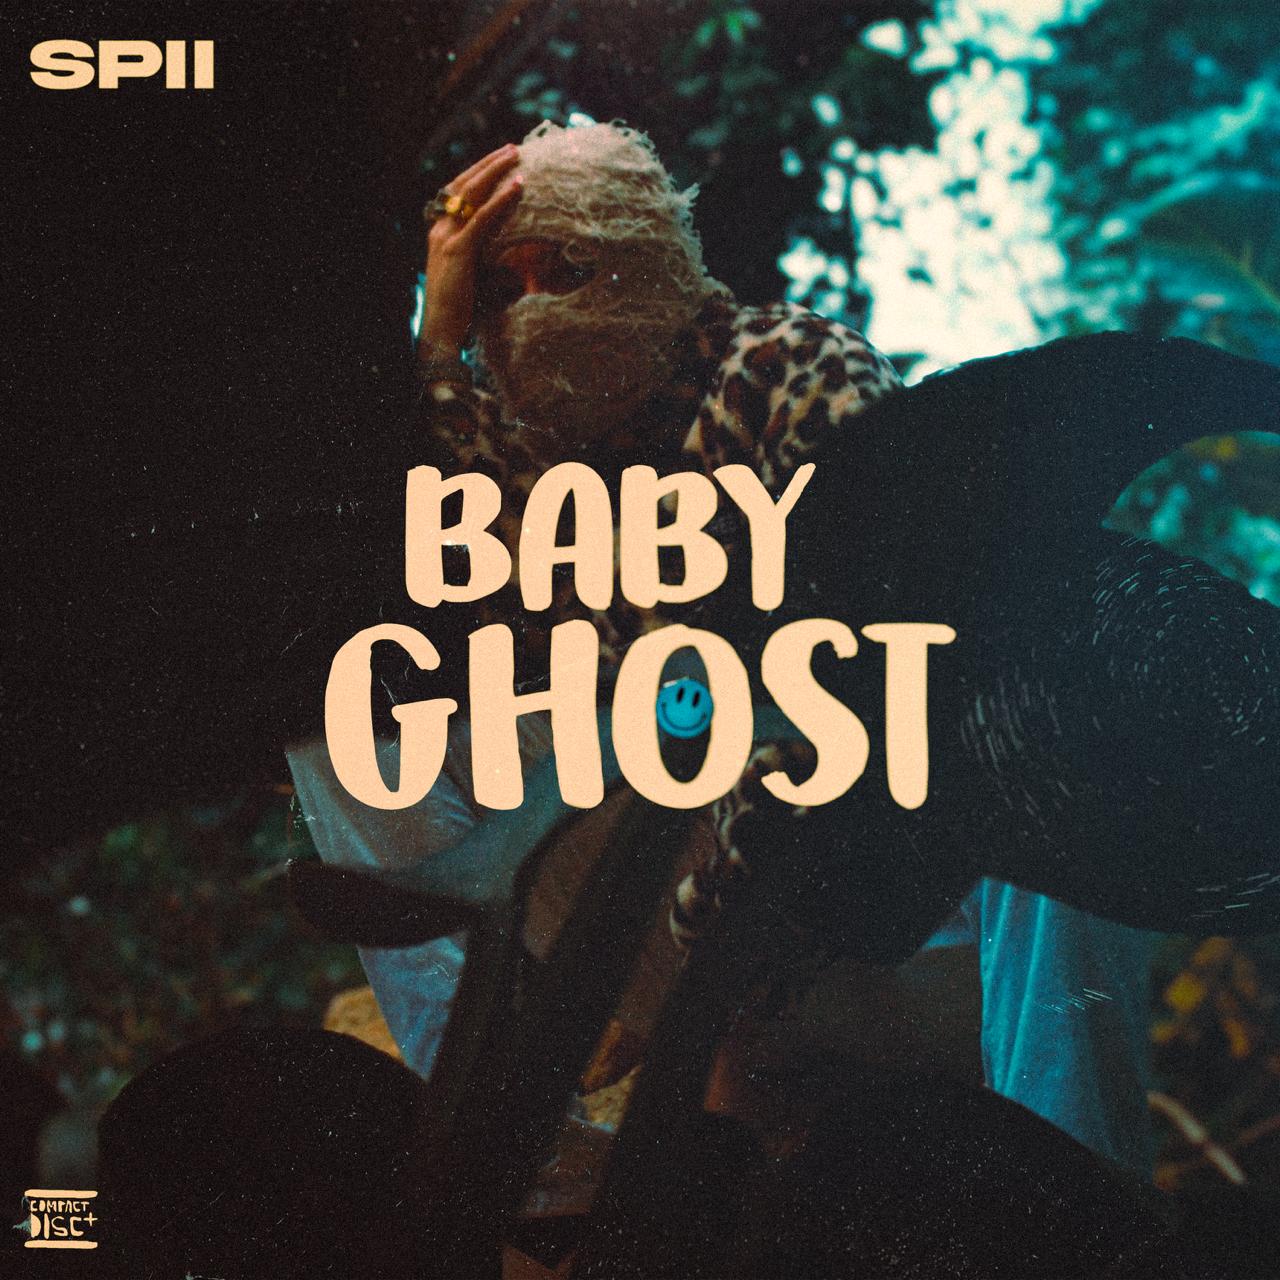 Spii – Baby Ghost